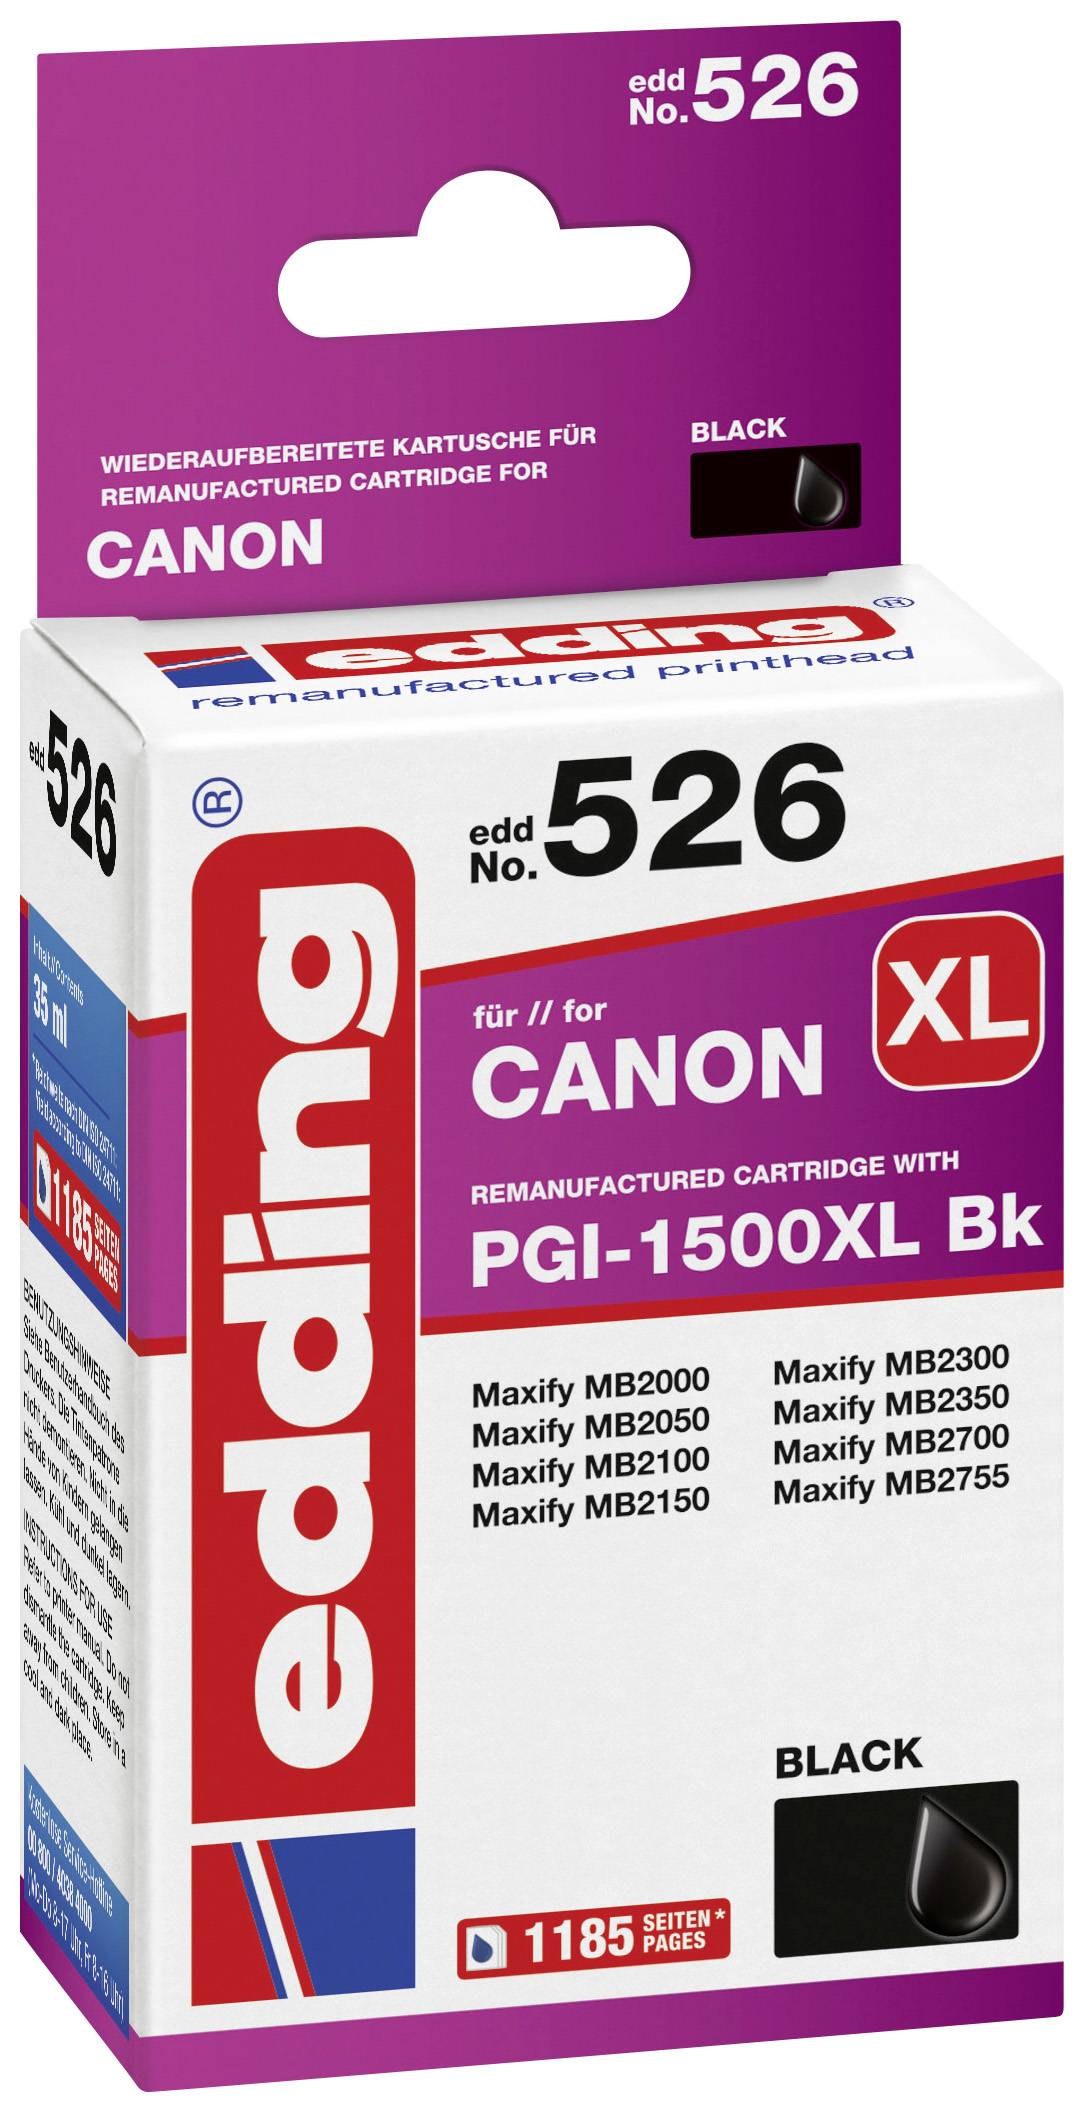 EDDING Tintenpatrone ersetzt Canon PGI-1500XL Bk Kompatibel einzeln Schwarz EDD-526 18-526 (18-526)